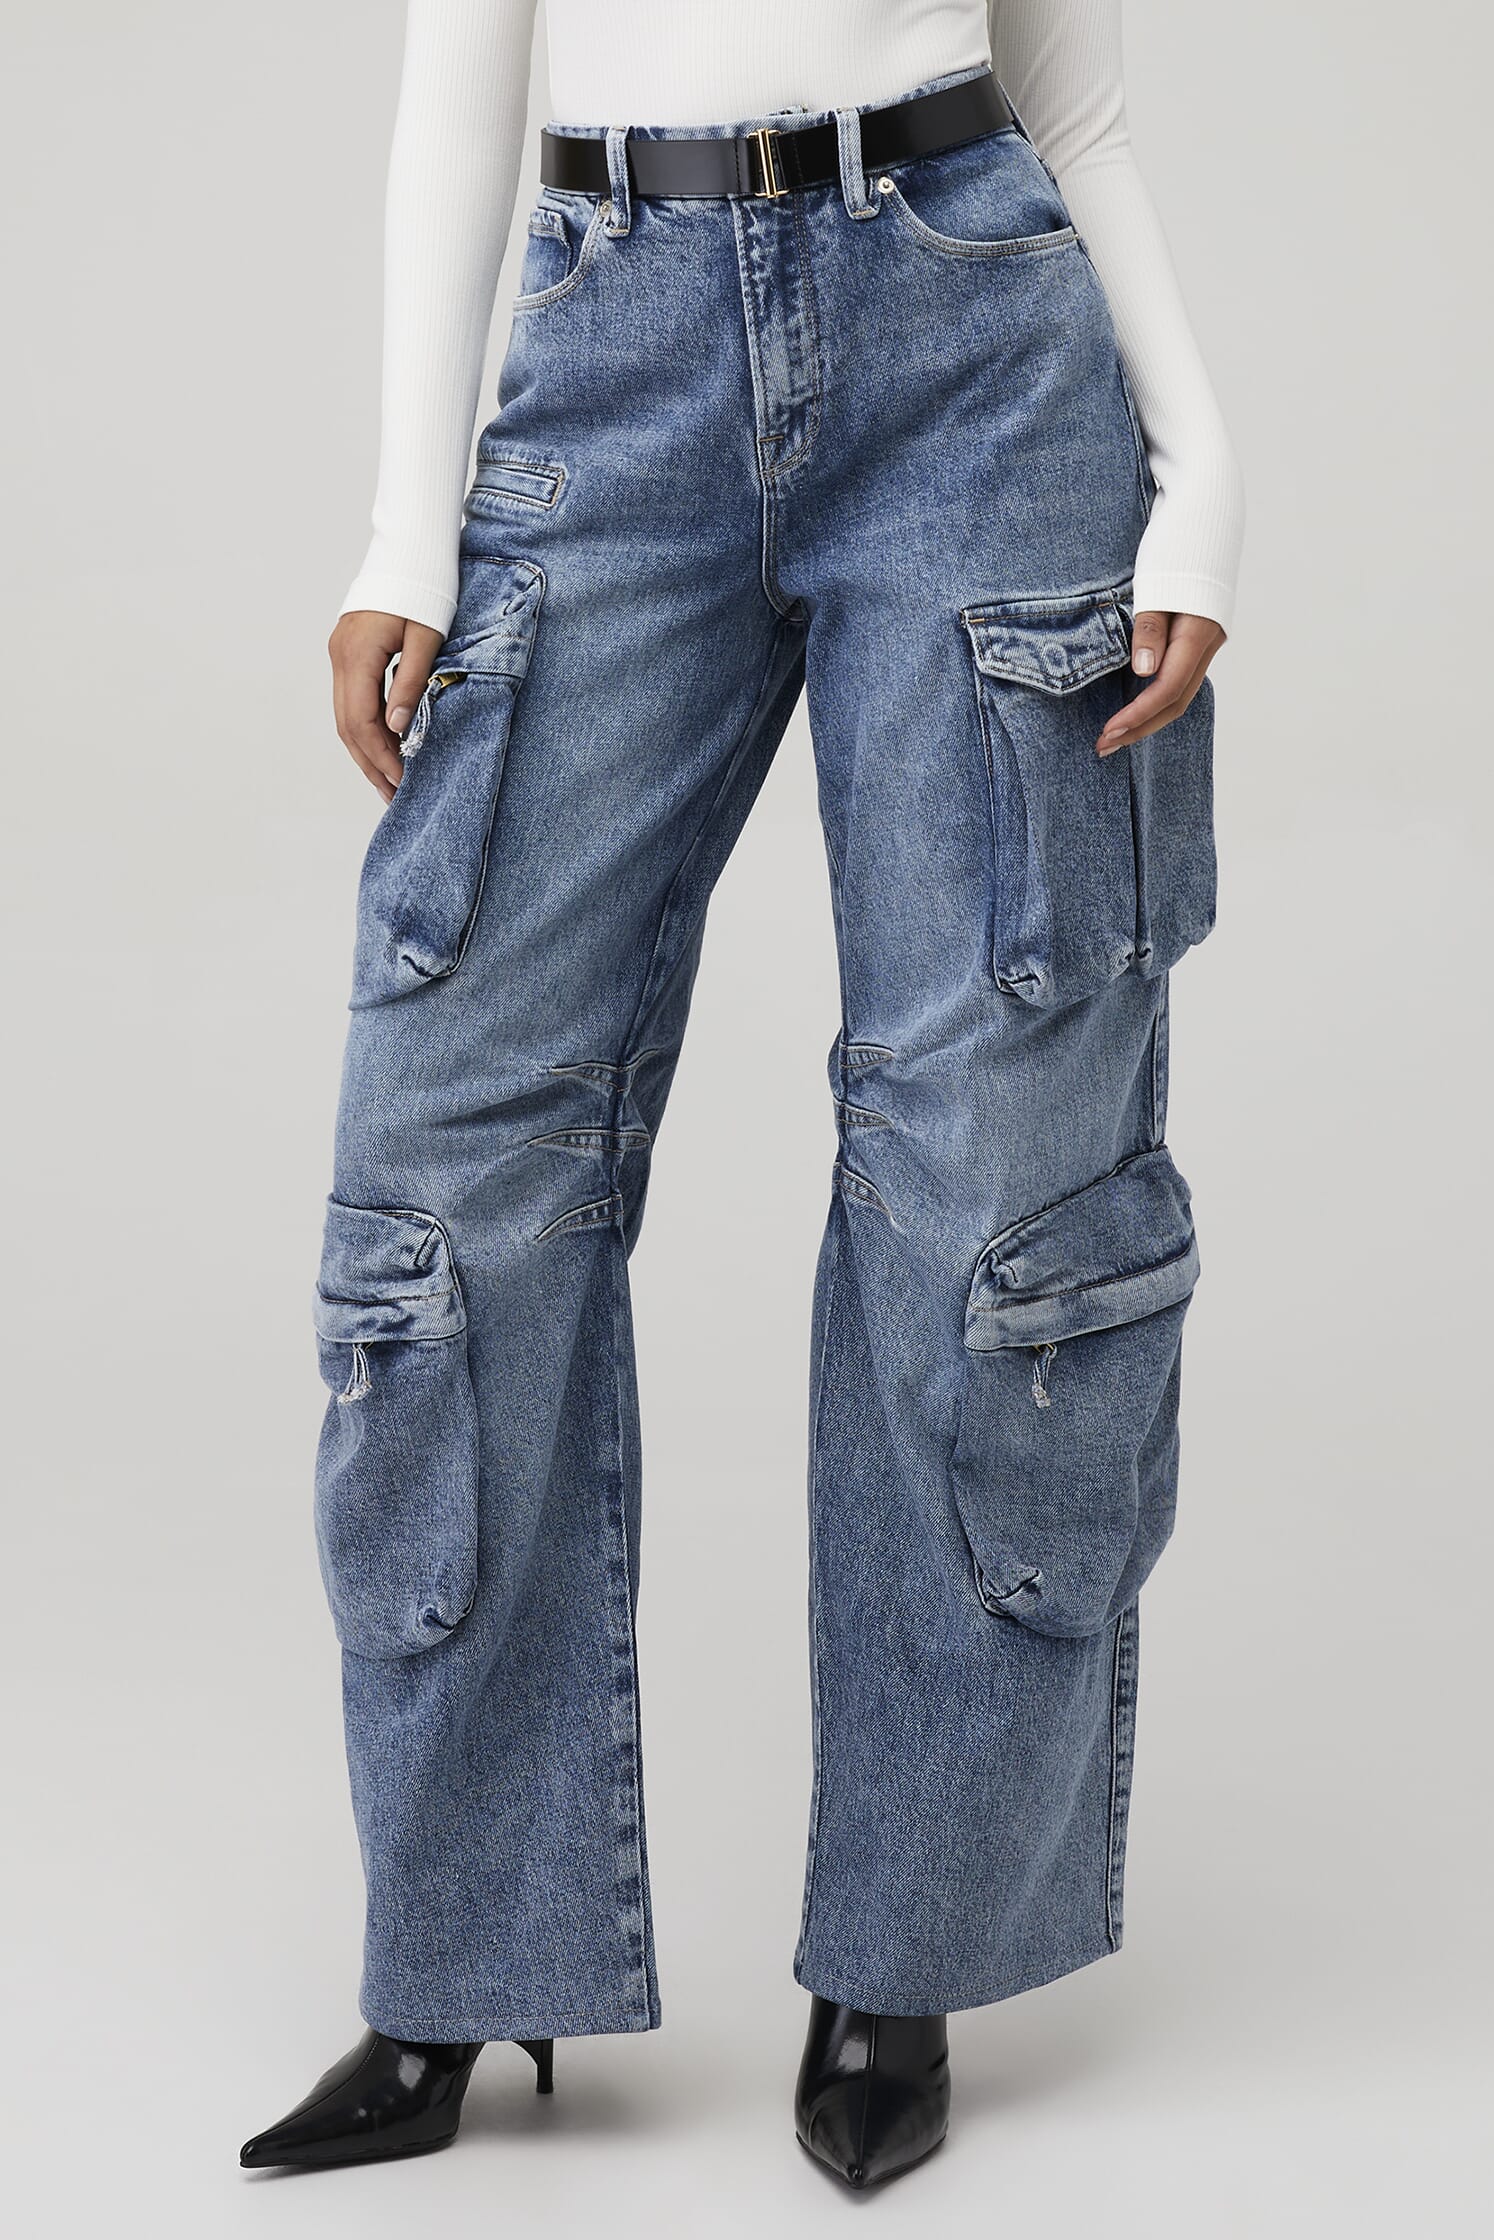 Women's Waist Jeans - GOOD AMERICAN